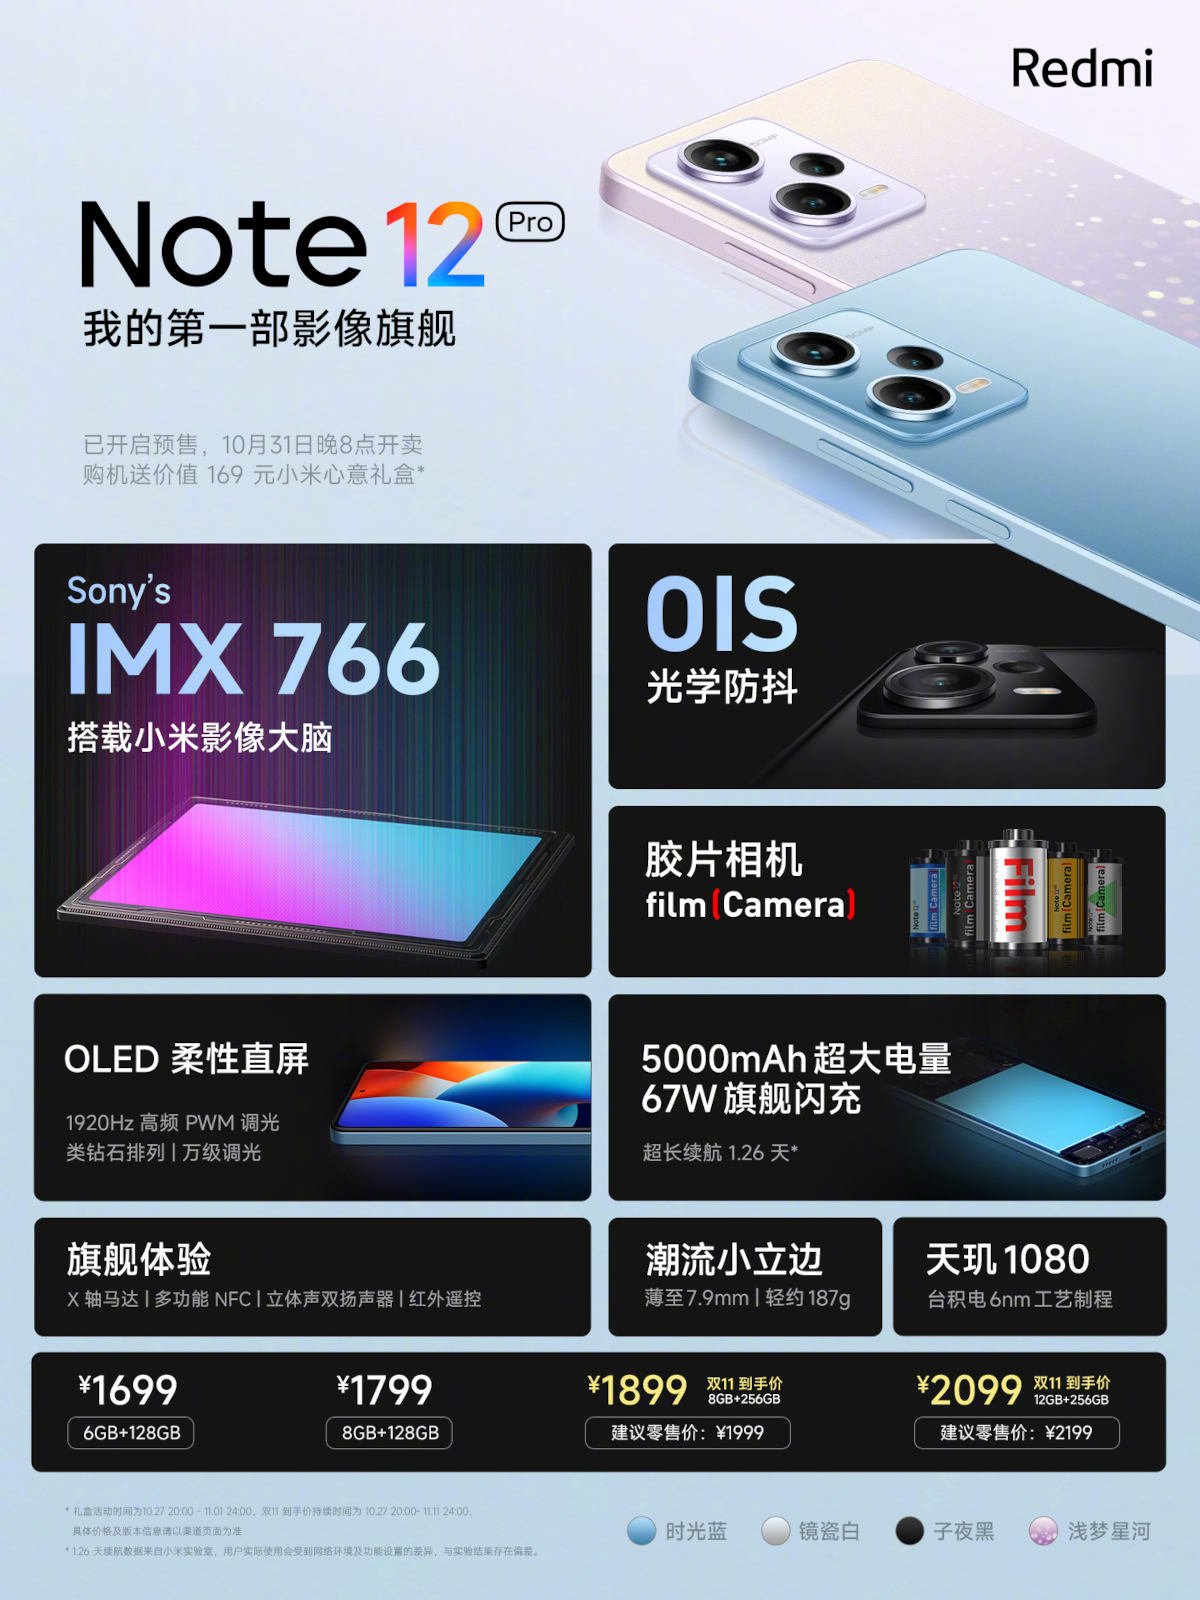 Redmi Note 12 Pro+ and 12 Pro